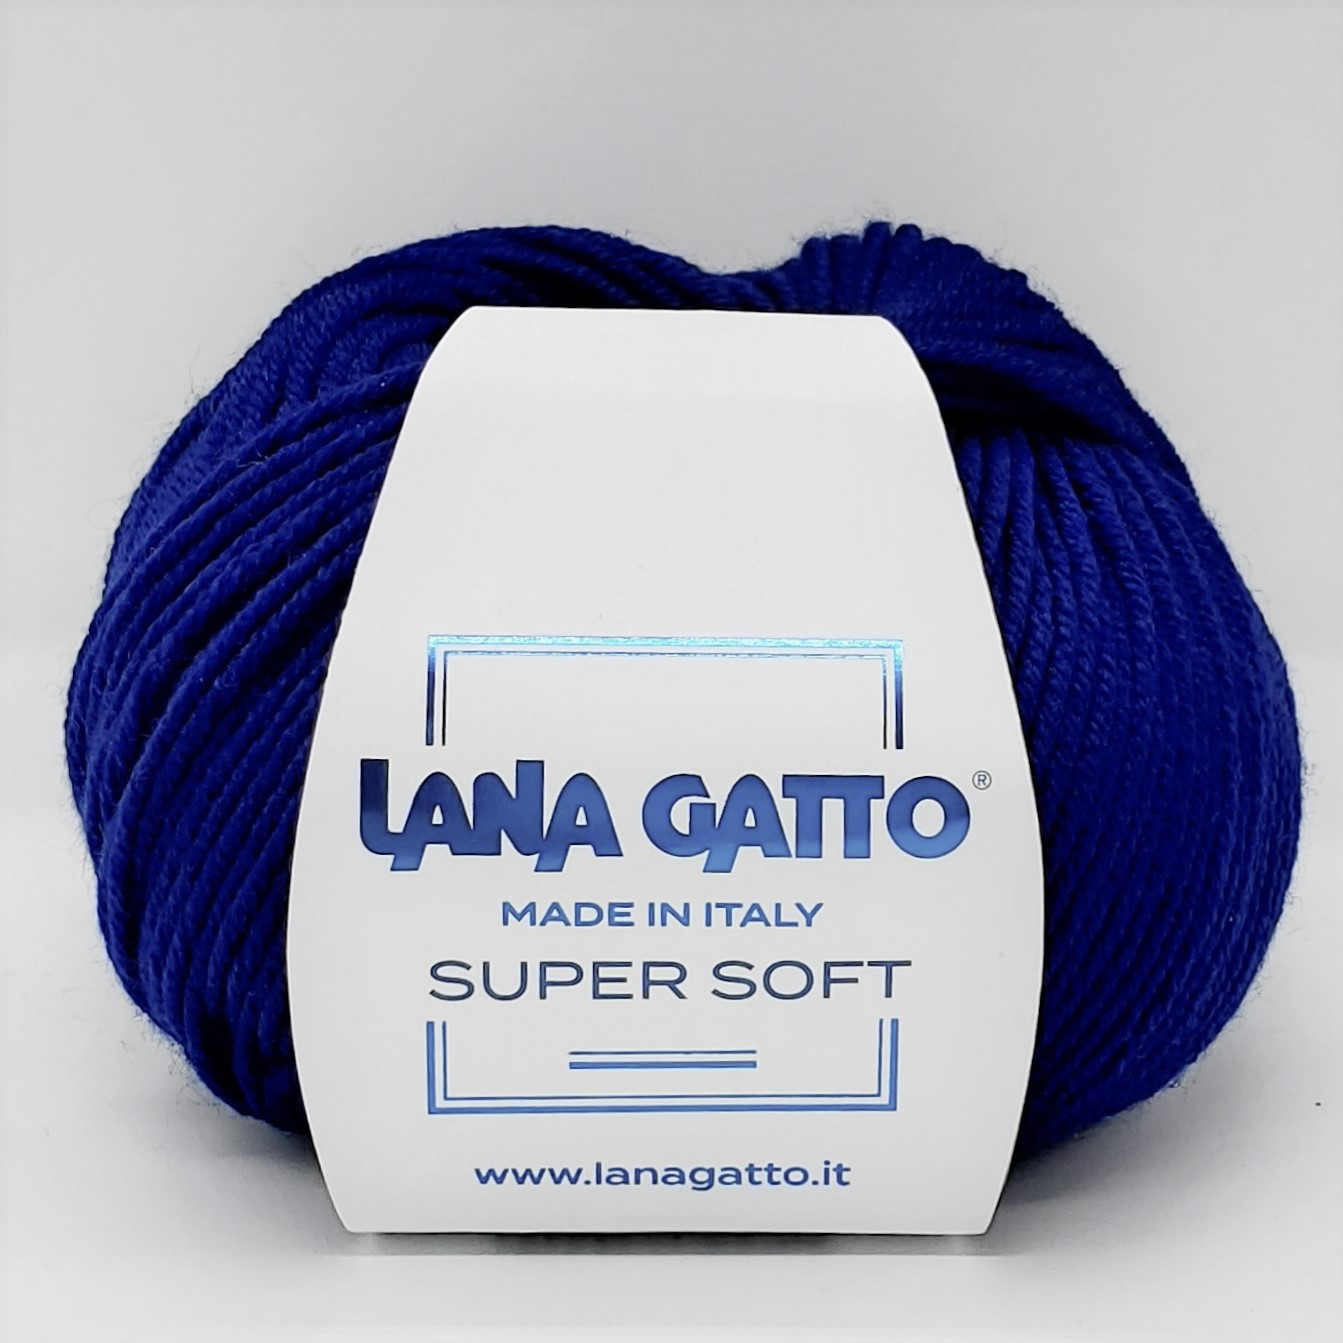 Пряжа softer. Пряжа Lana gatto super Soft 14339.